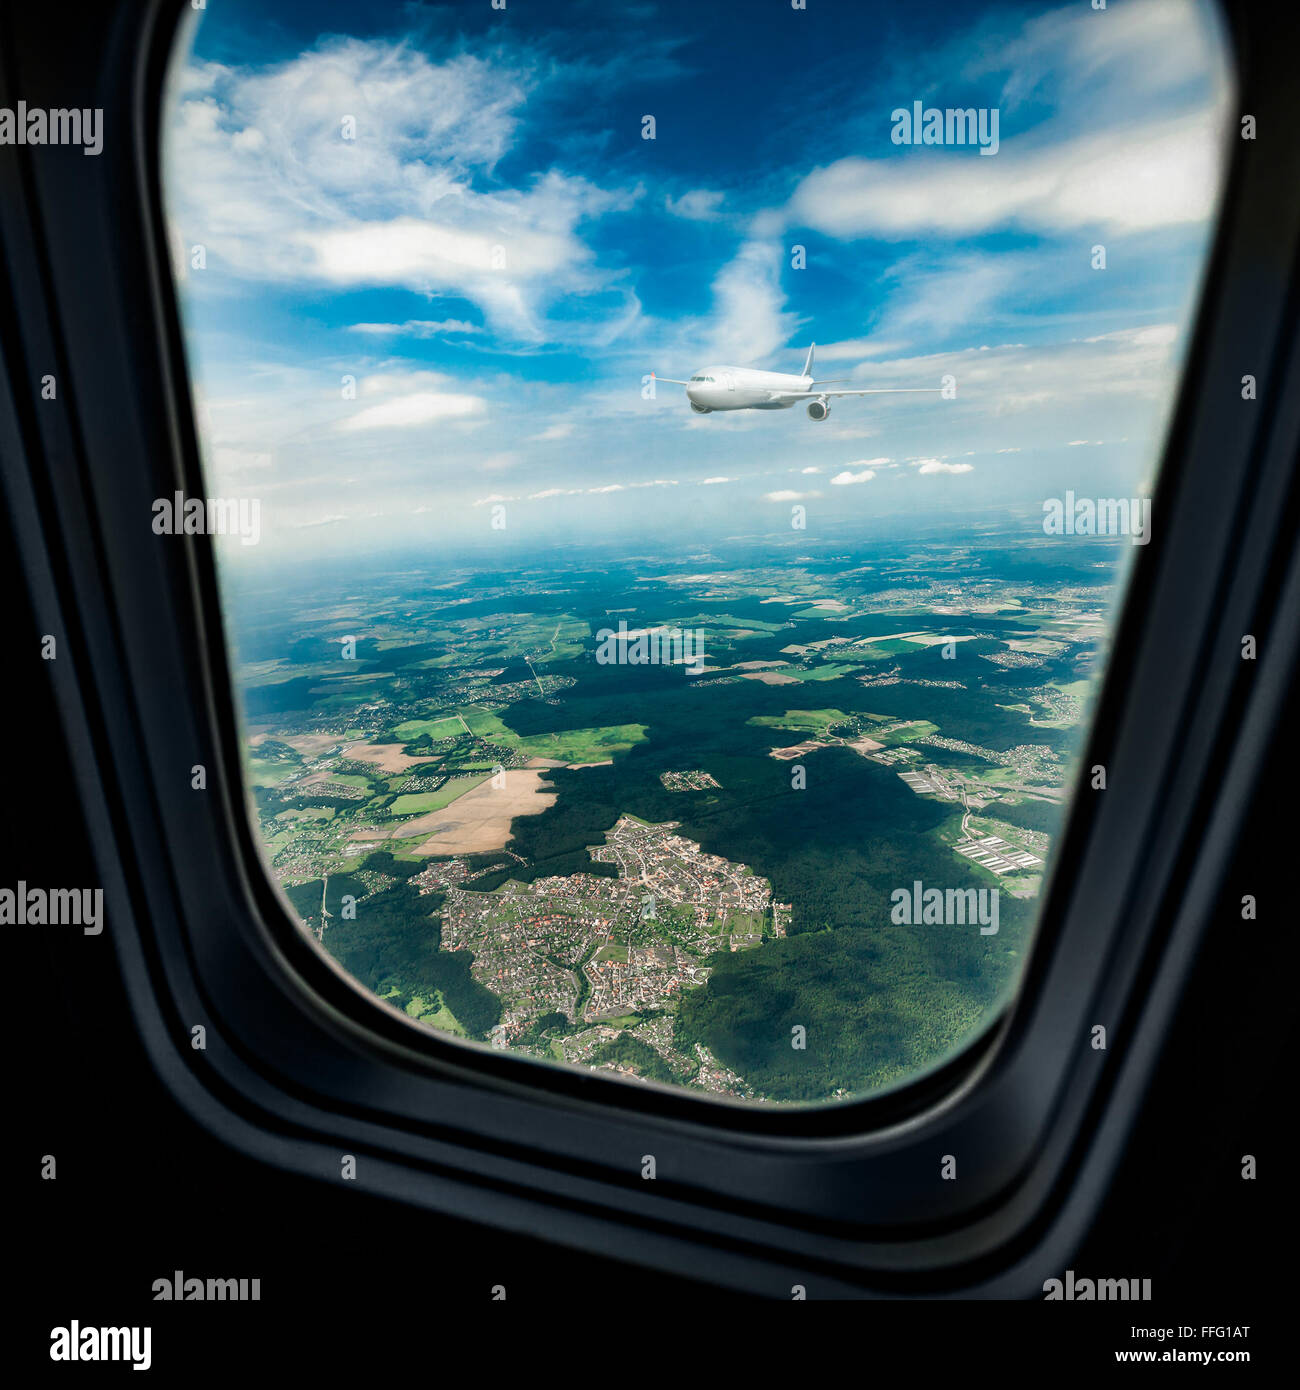 Classic image through aircraft window onto jet engine. The porthole window flies another passenger plane Stock Photo